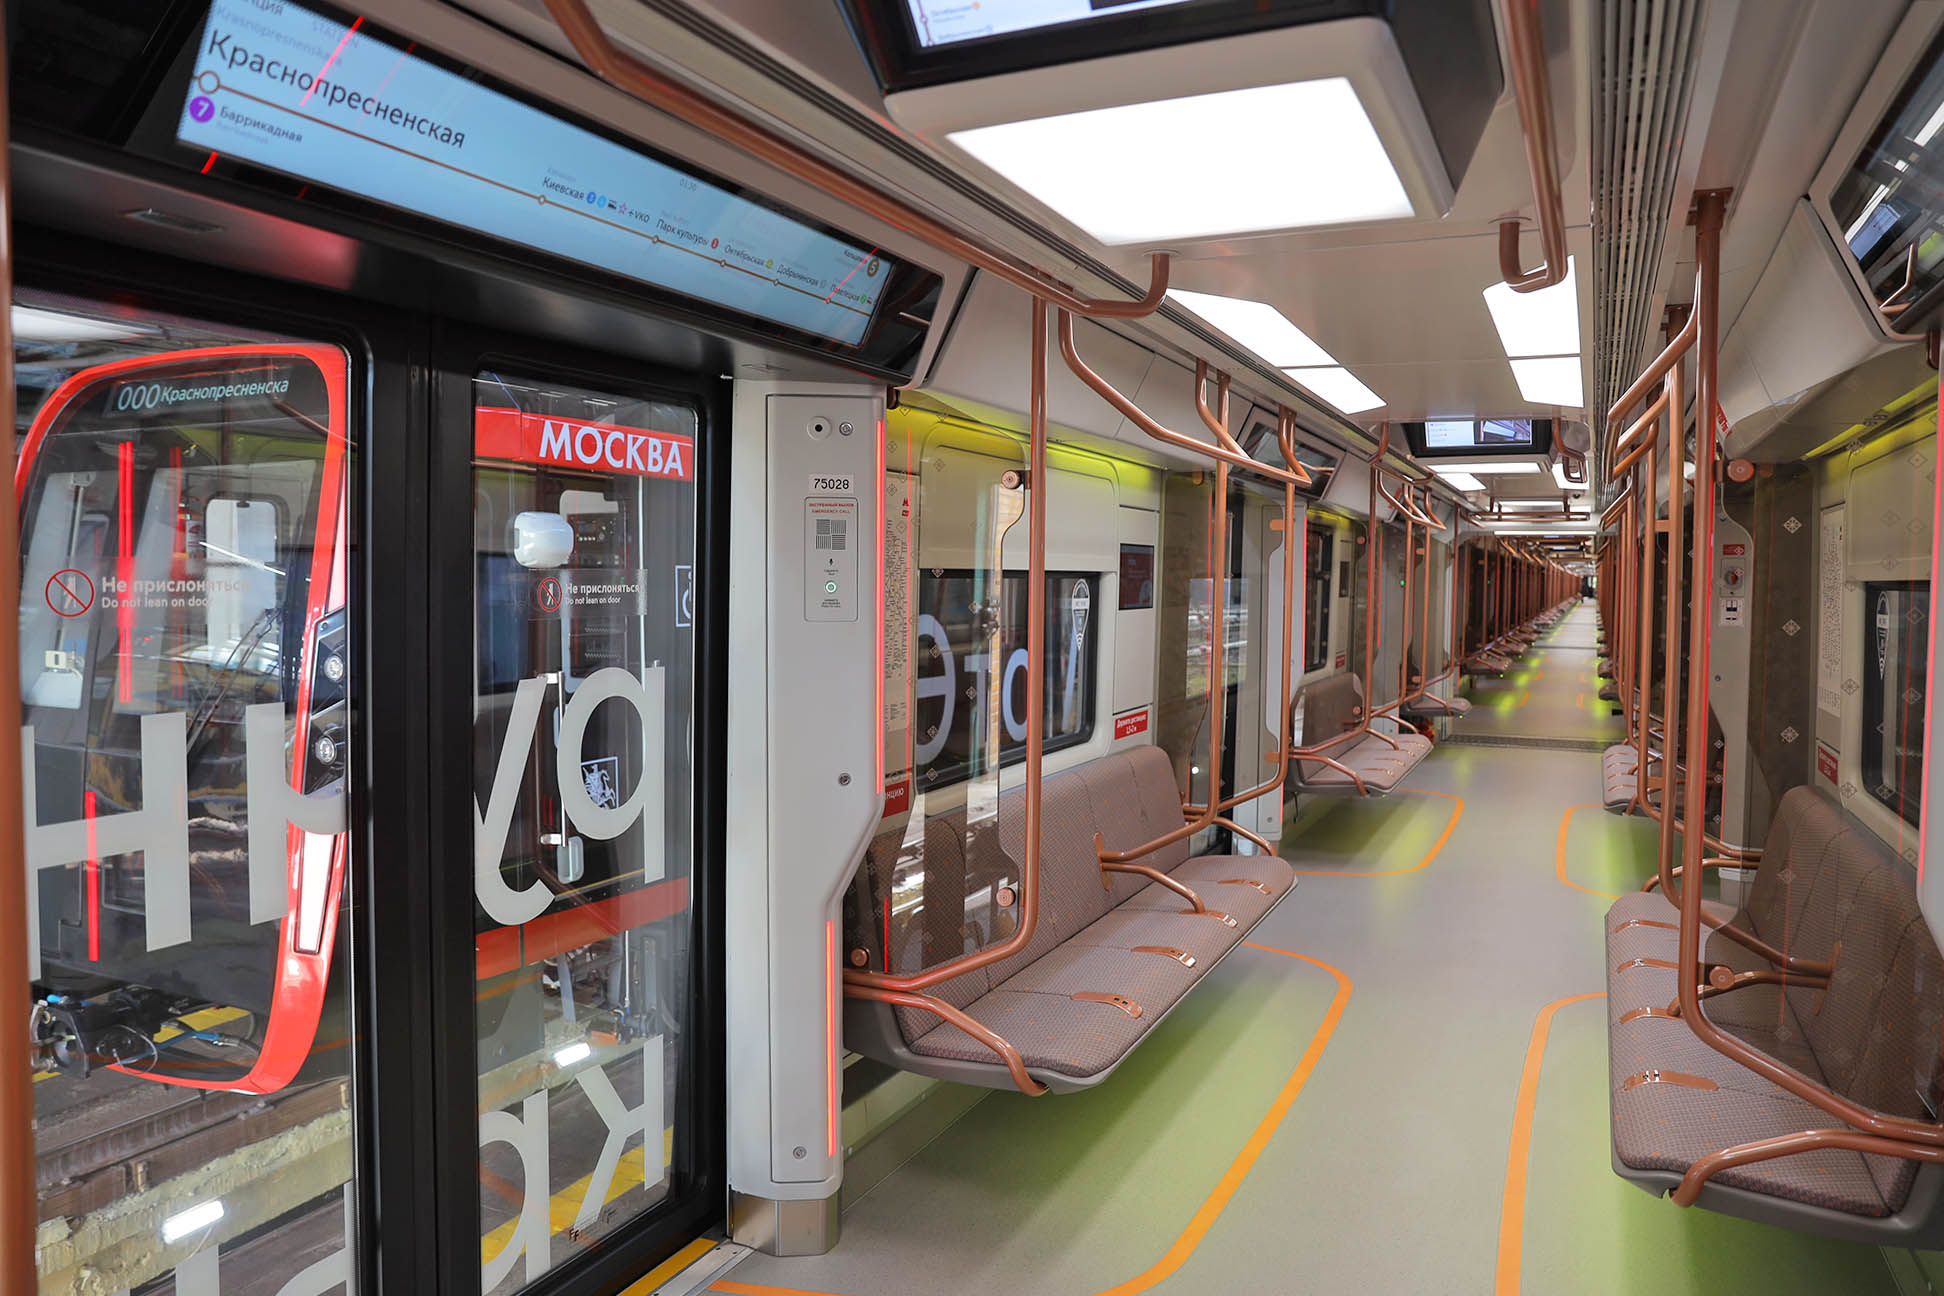 Interior of Moskva-2020 metro train